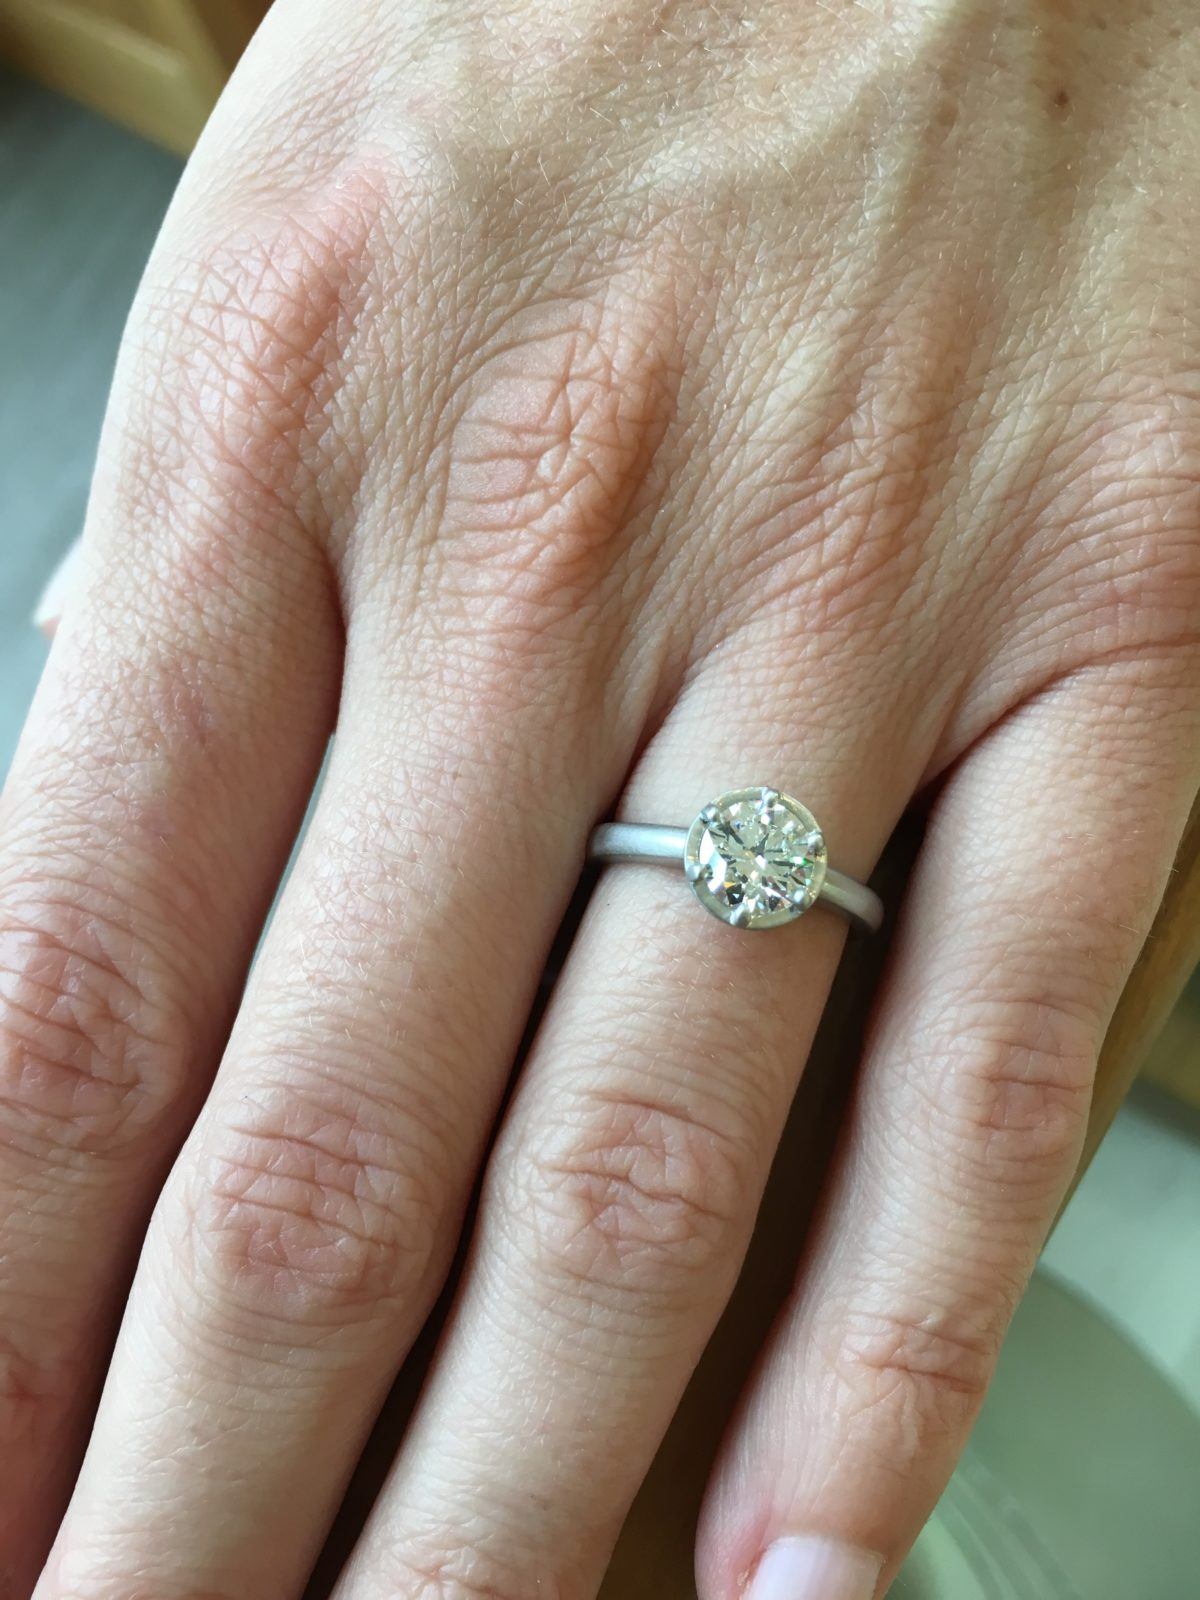 6-Point Engagement Ring in Platinum